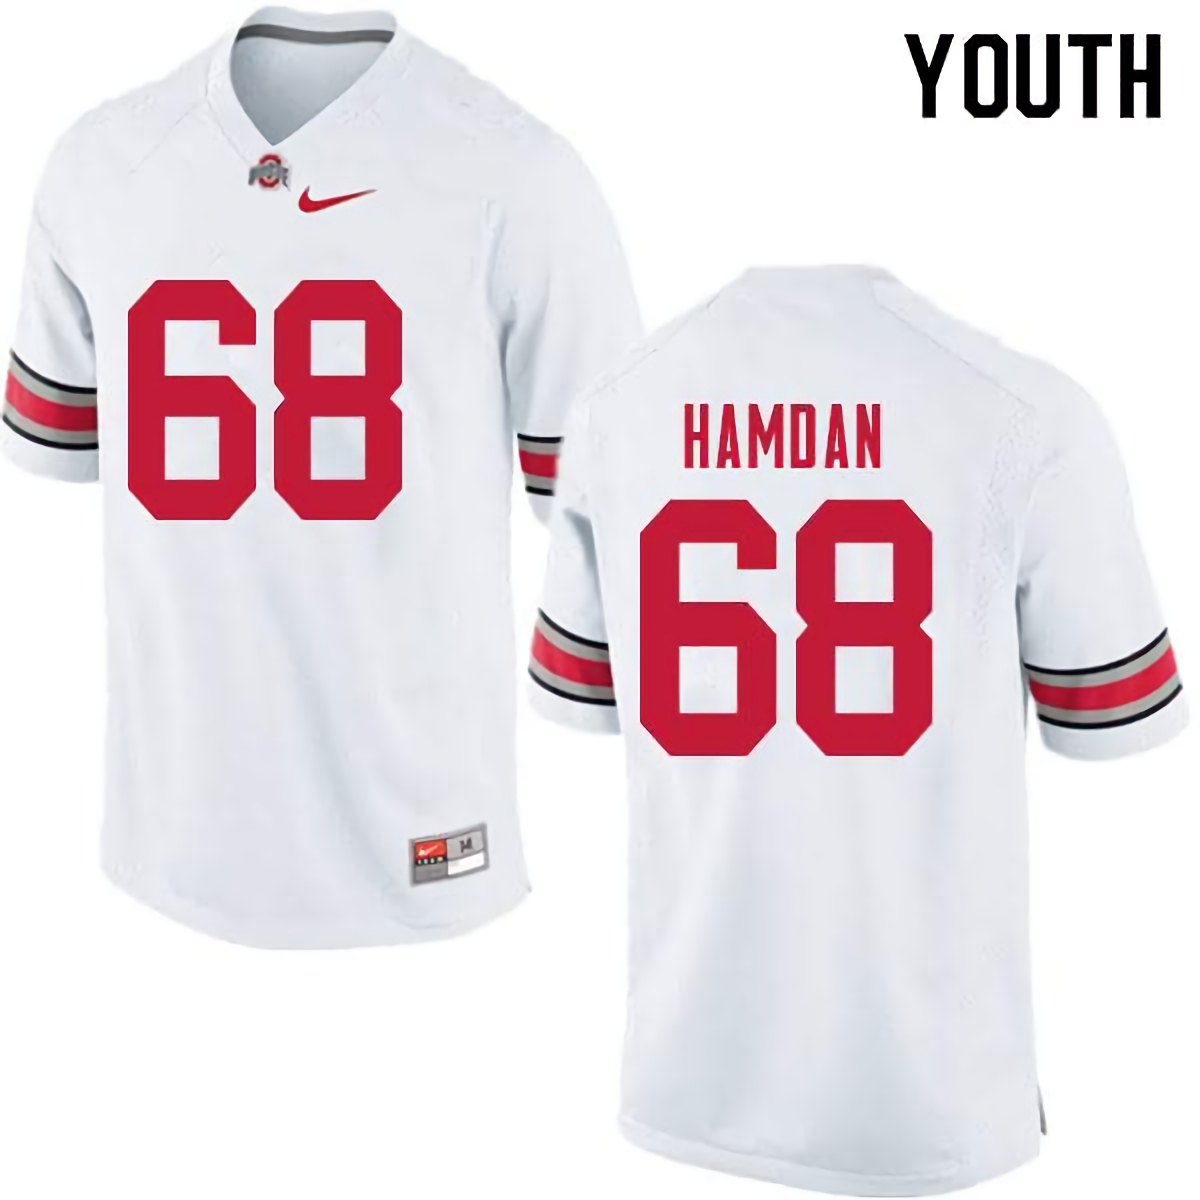 Zaid Hamdan Ohio State Buckeyes Youth NCAA #68 Nike White College Stitched Football Jersey OGI2556SX